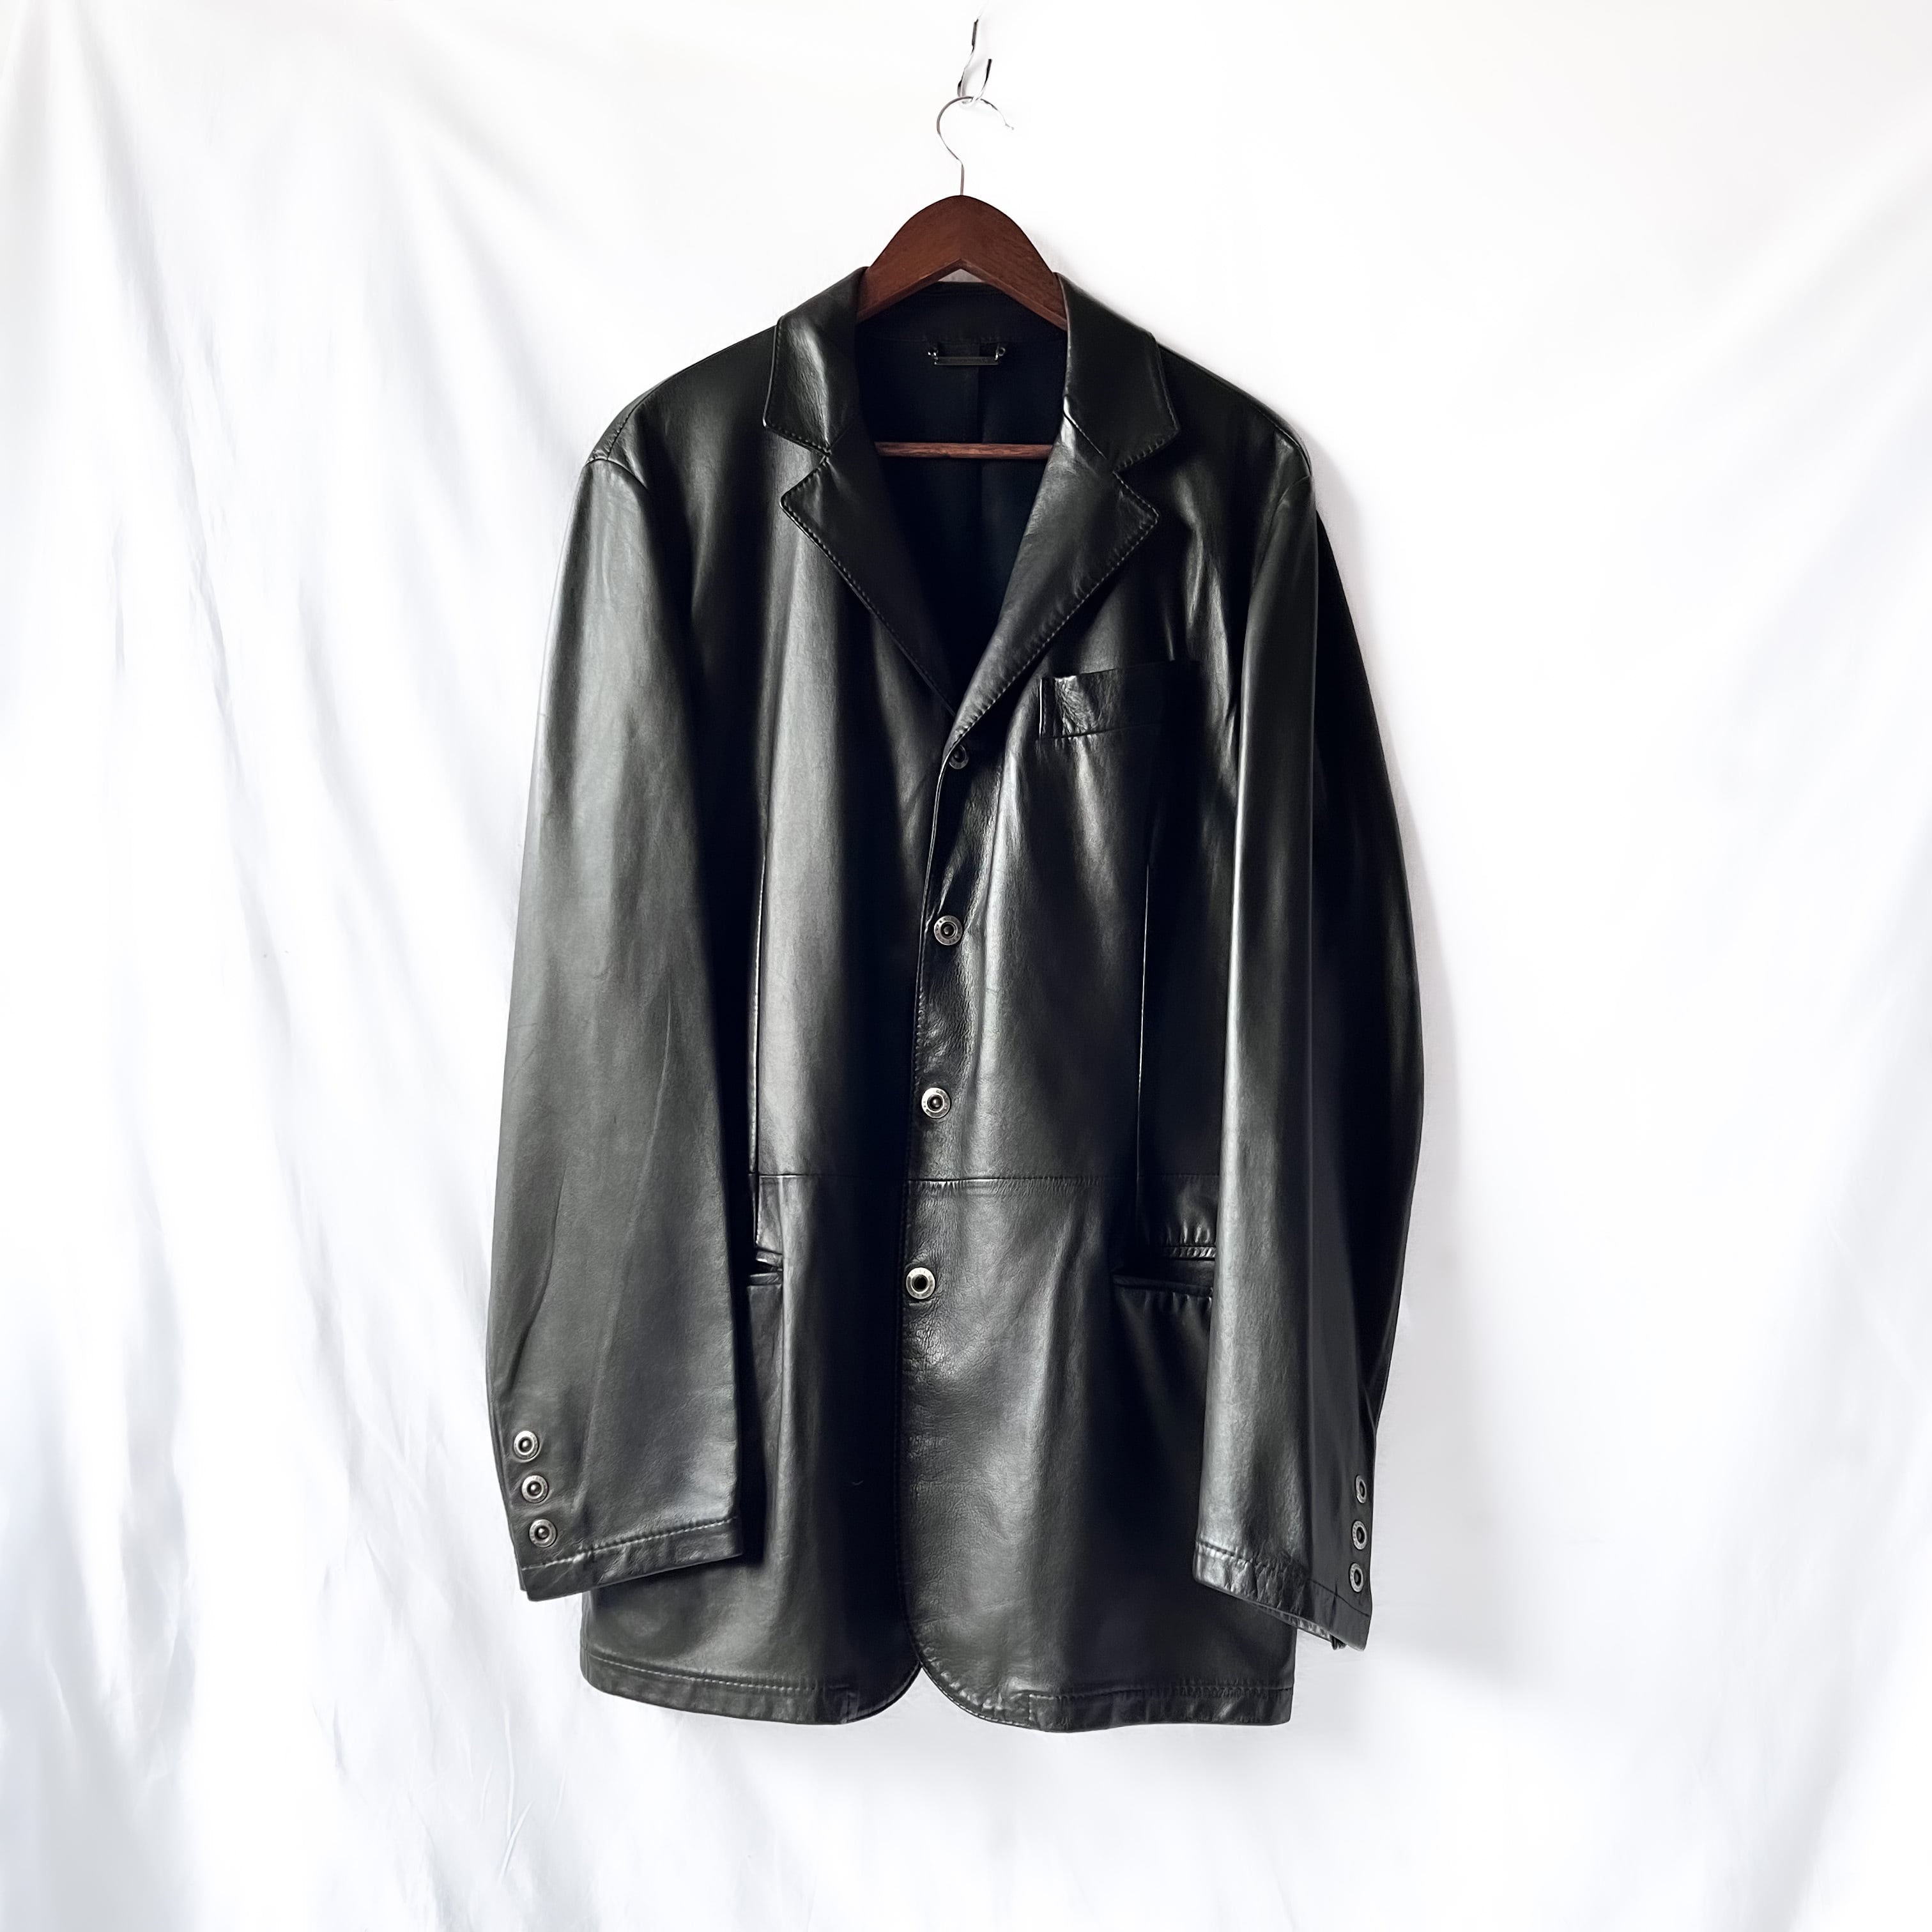 90s “GIANFRANCO FERRE” sheep leather jacket made in italy ジャンフランコフェレ  シープスキンレザージャケット レザーコート山羊革